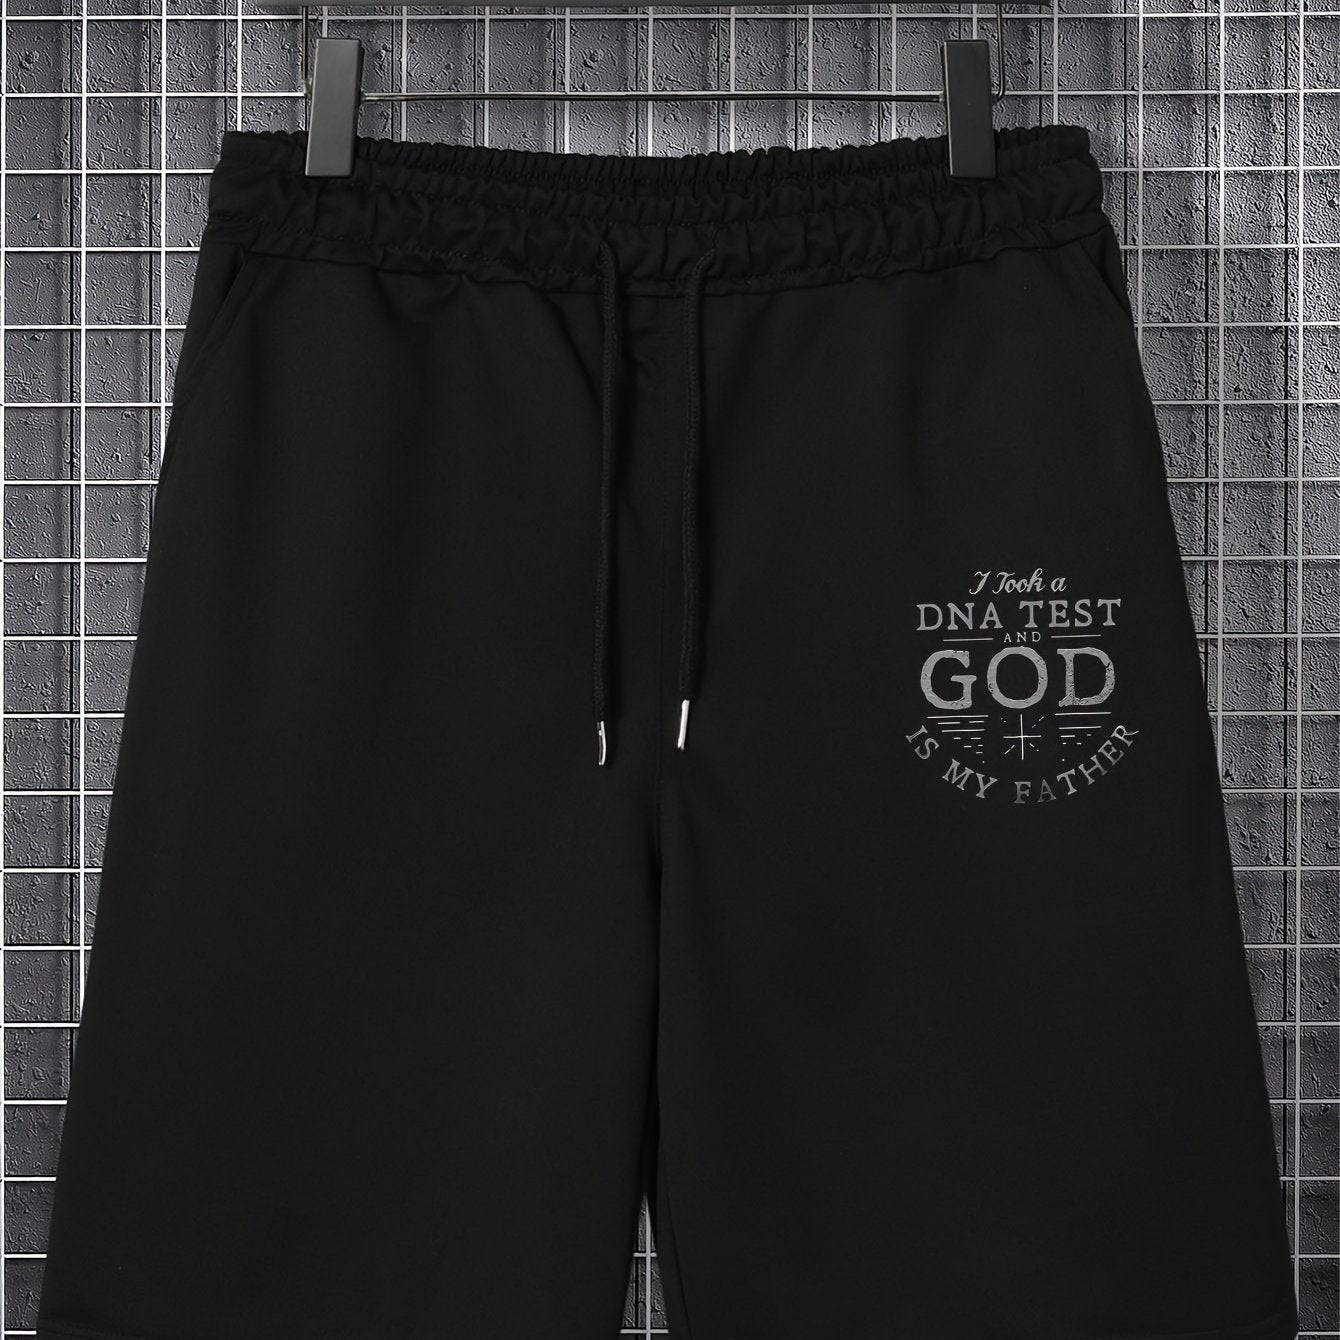 I Took A DNA Test Men's Christian Shorts claimedbygoddesigns